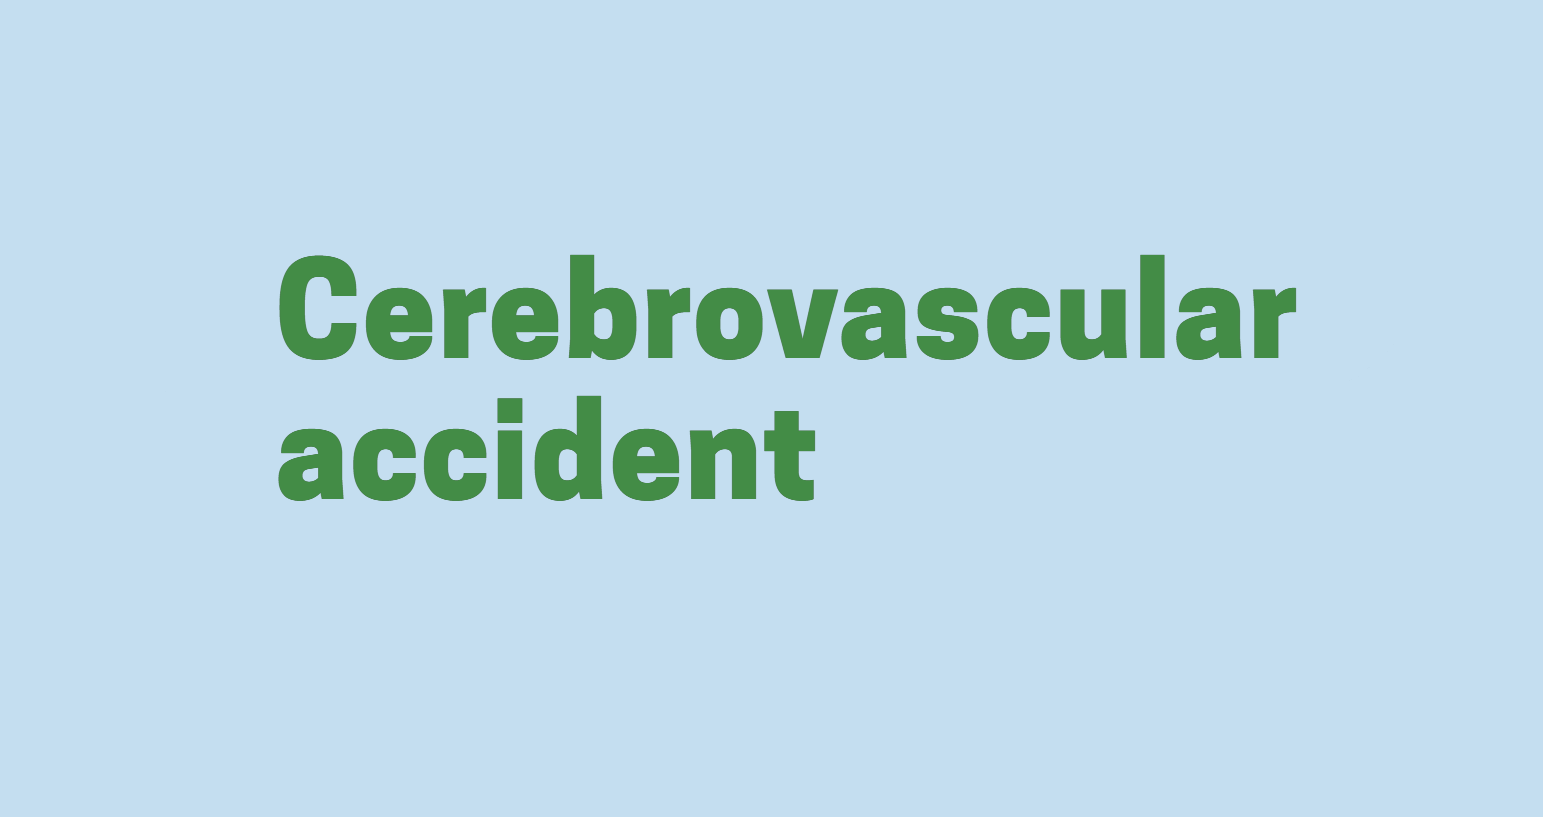 Cerebrovascular accident